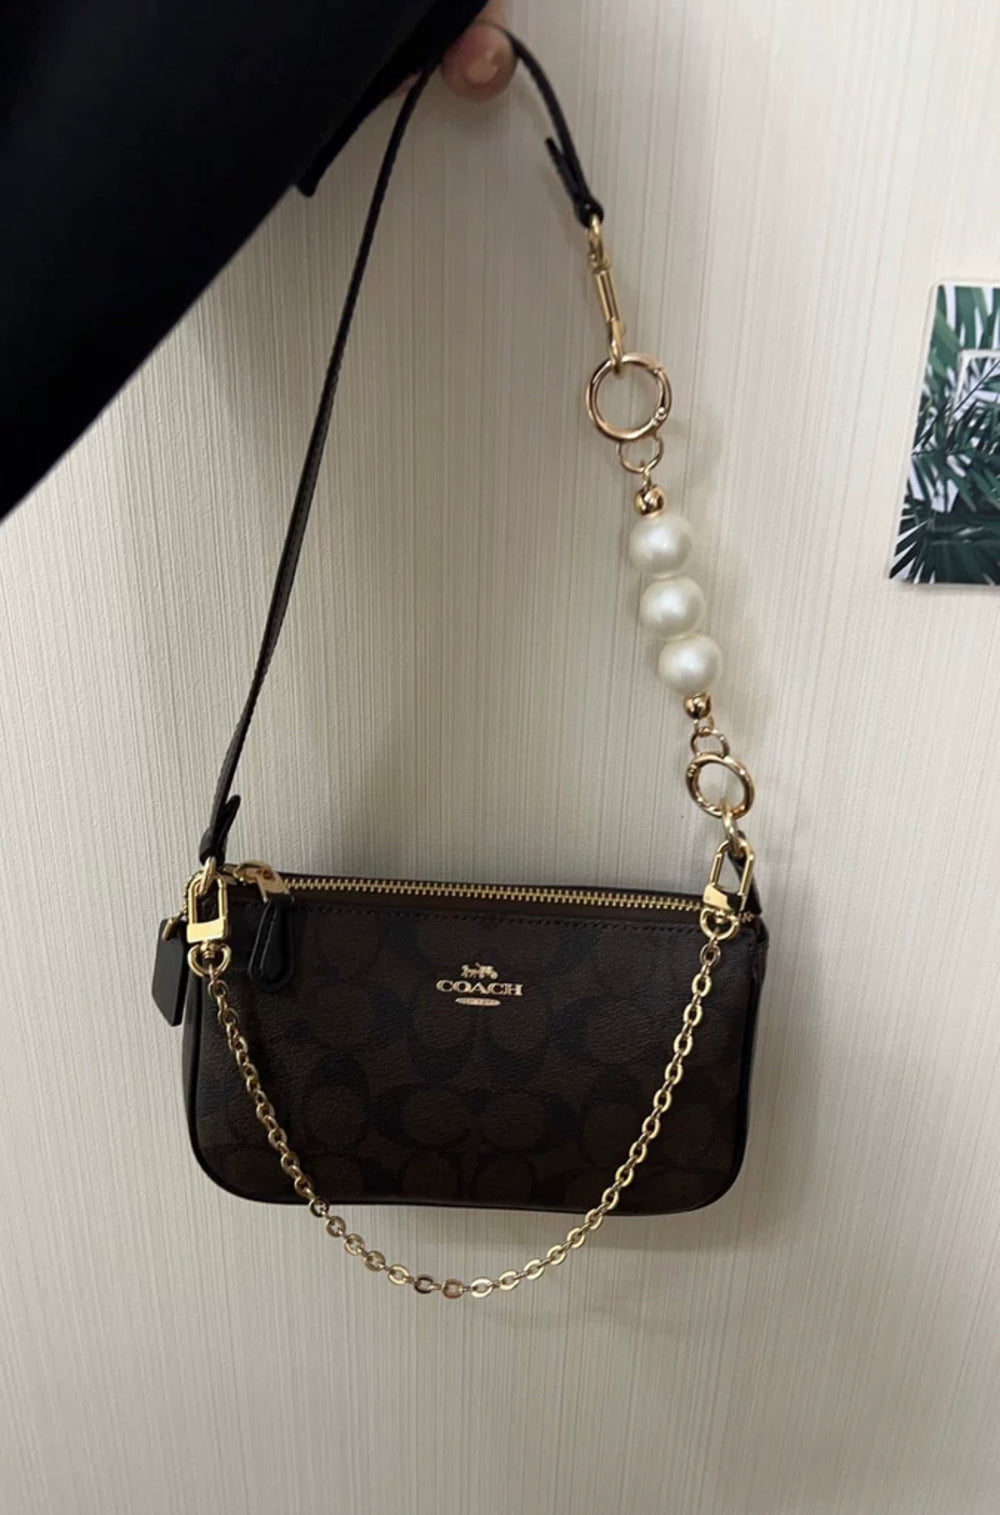 Isabella Y. review of Le Perle & Chain Handbag Charm